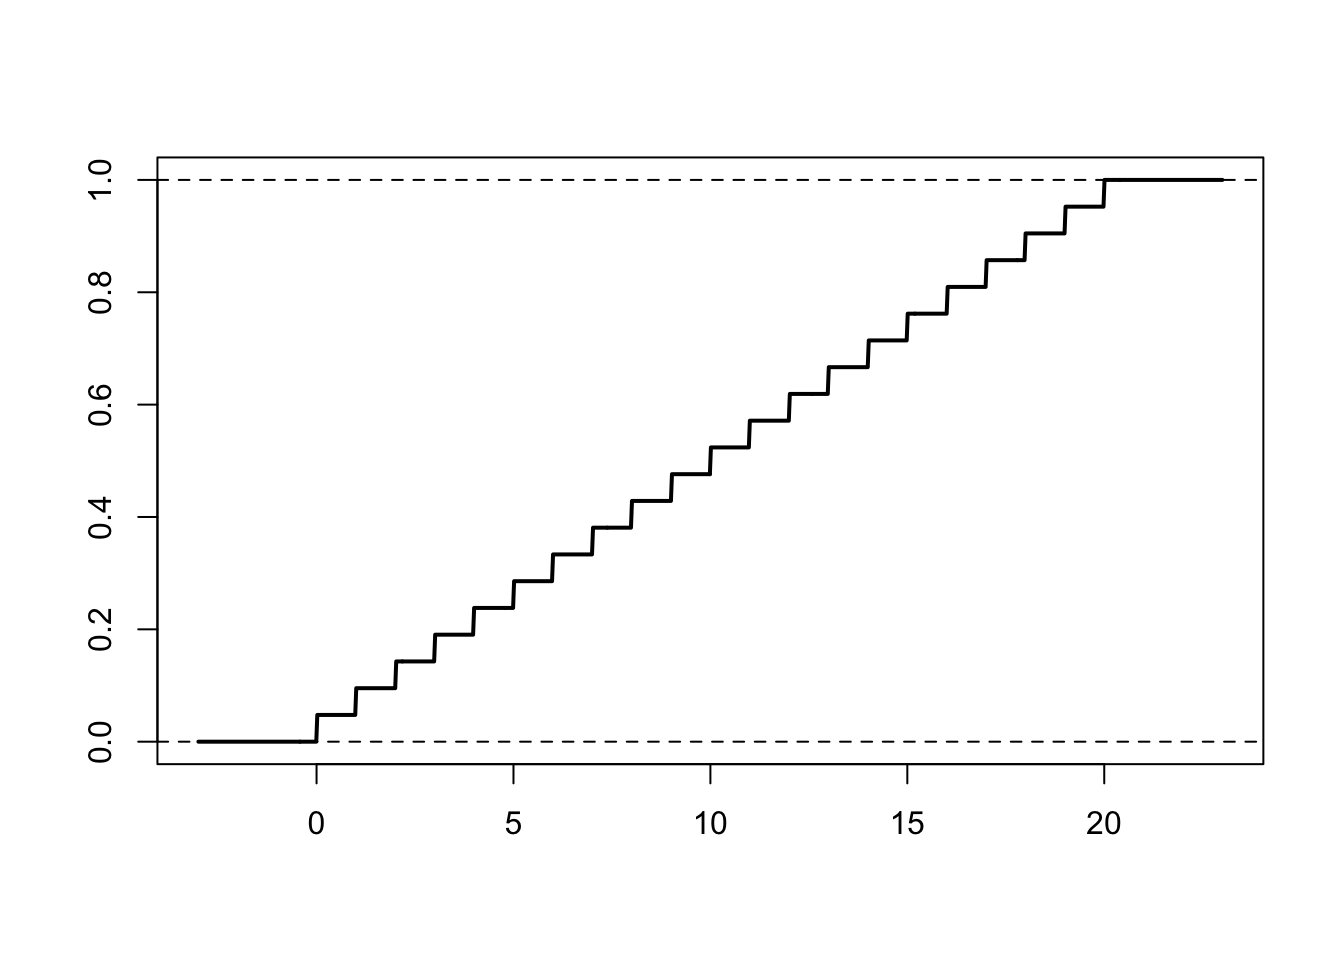 11.1.3 - Probability Distribution Plots